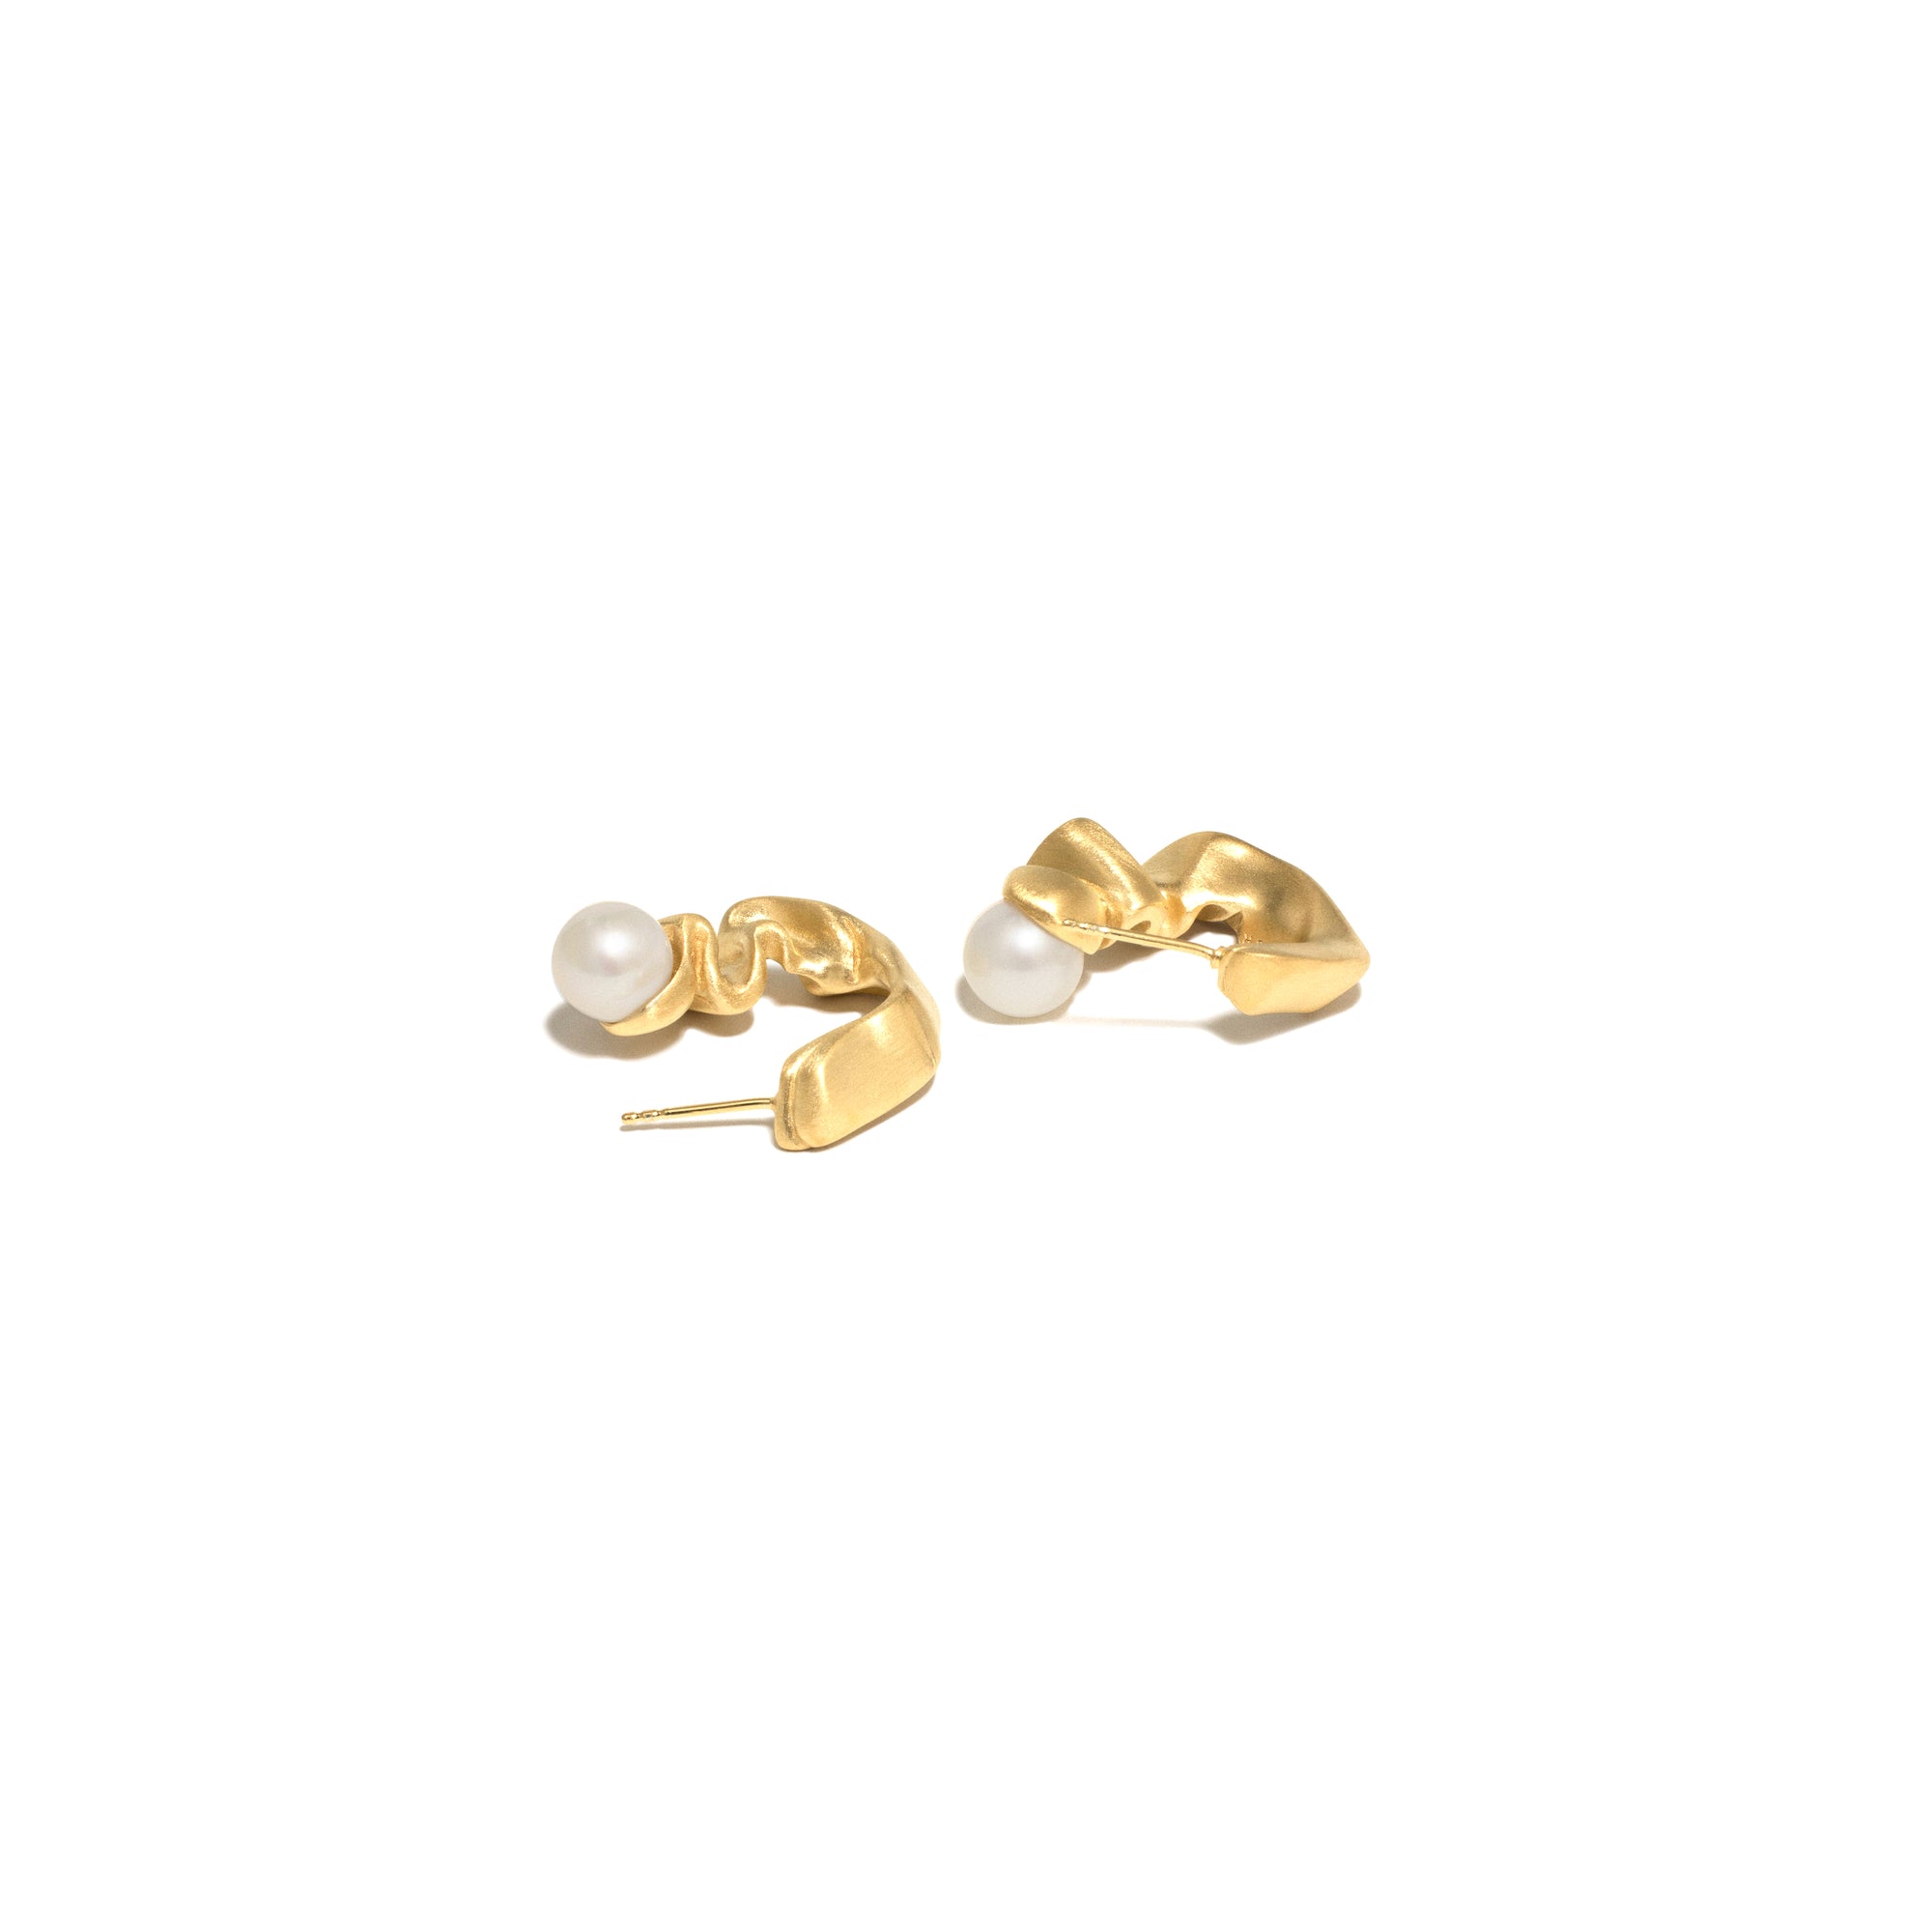 Completedworks - Crumple II Earrings - (Gold) view 2